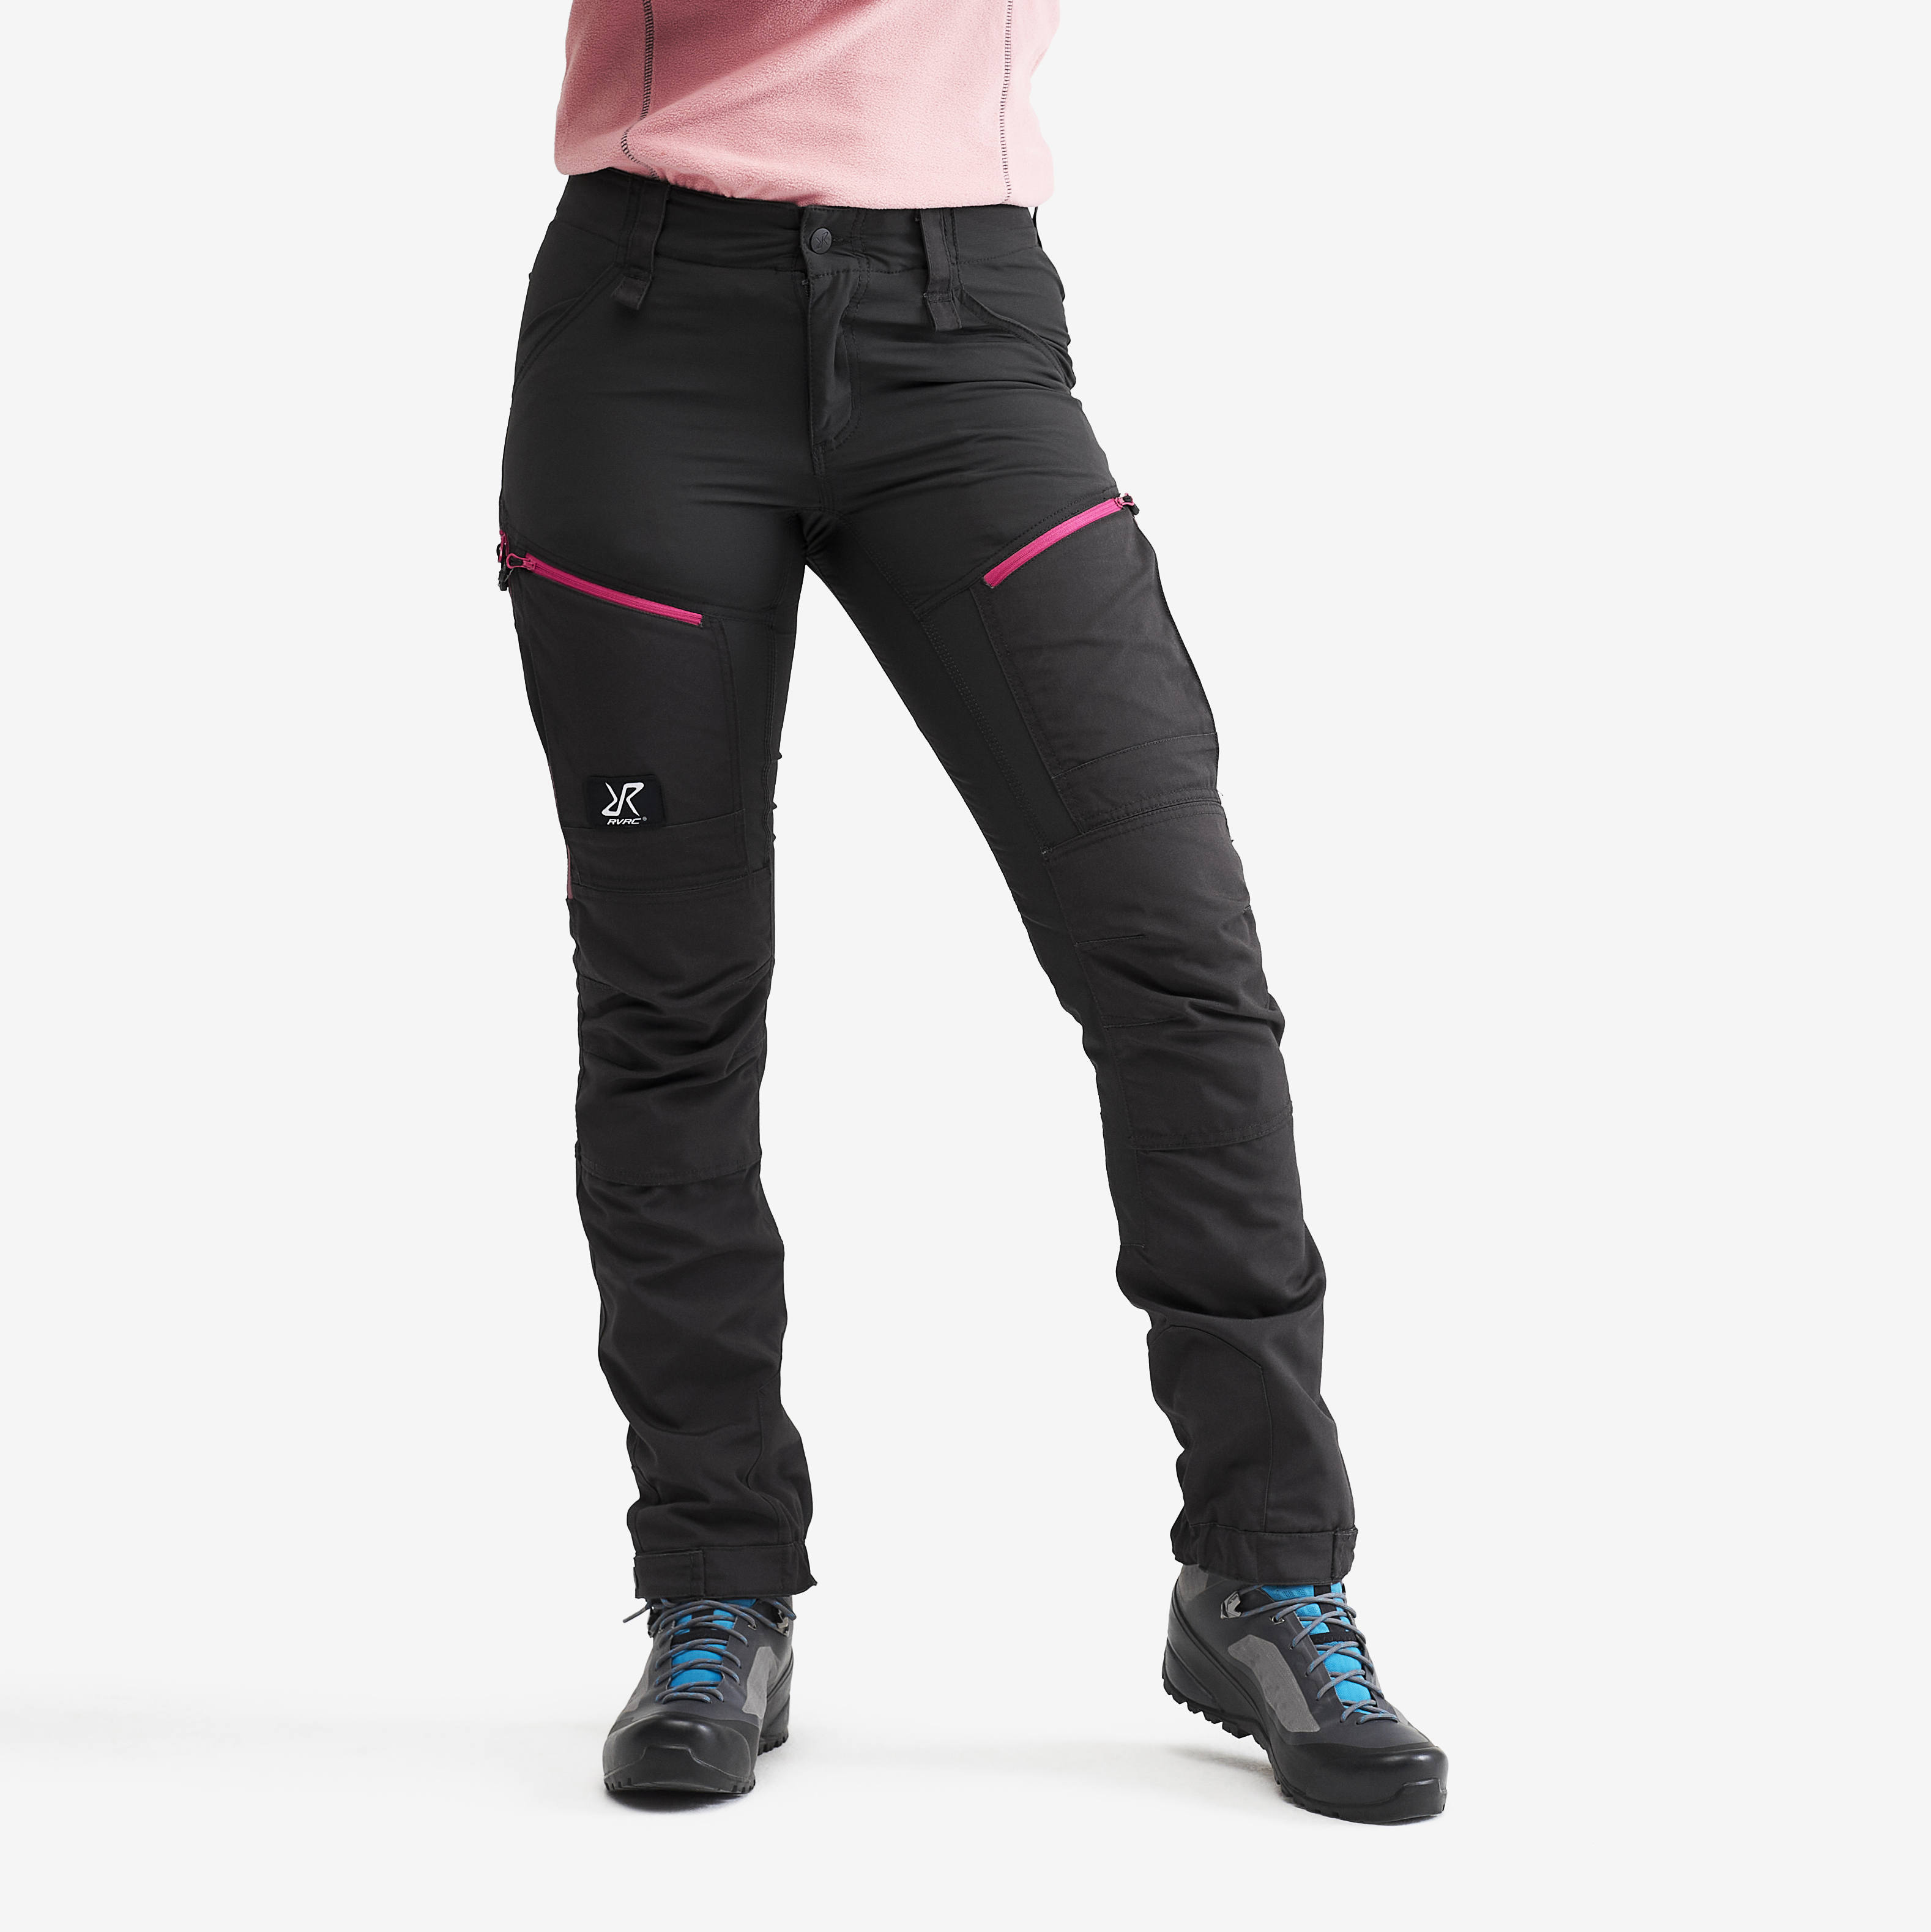 RVRC GP Pro hiking pants for women in dark grey